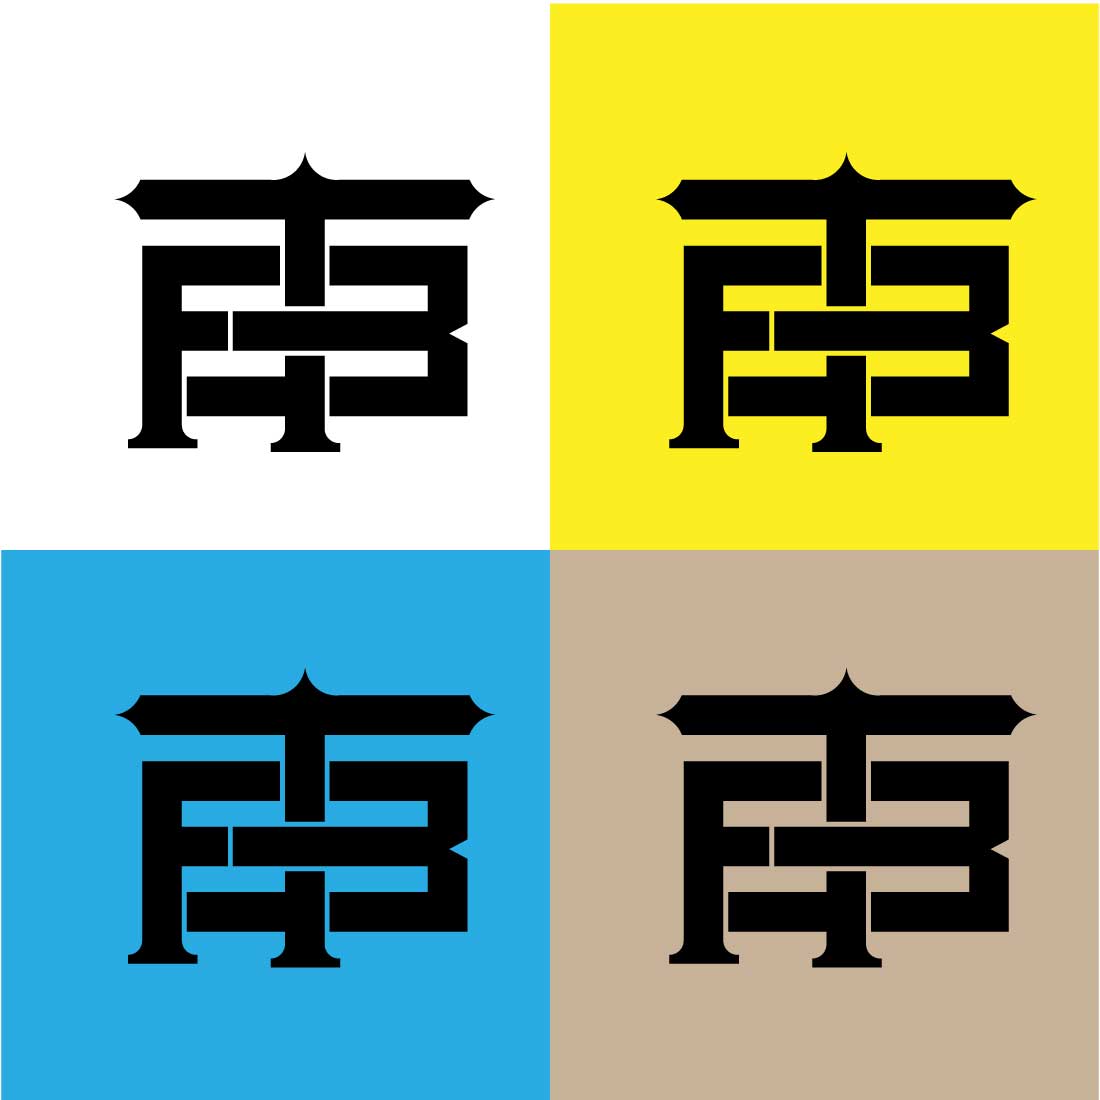 FTB initial monogram Letter Logo Design cover image.